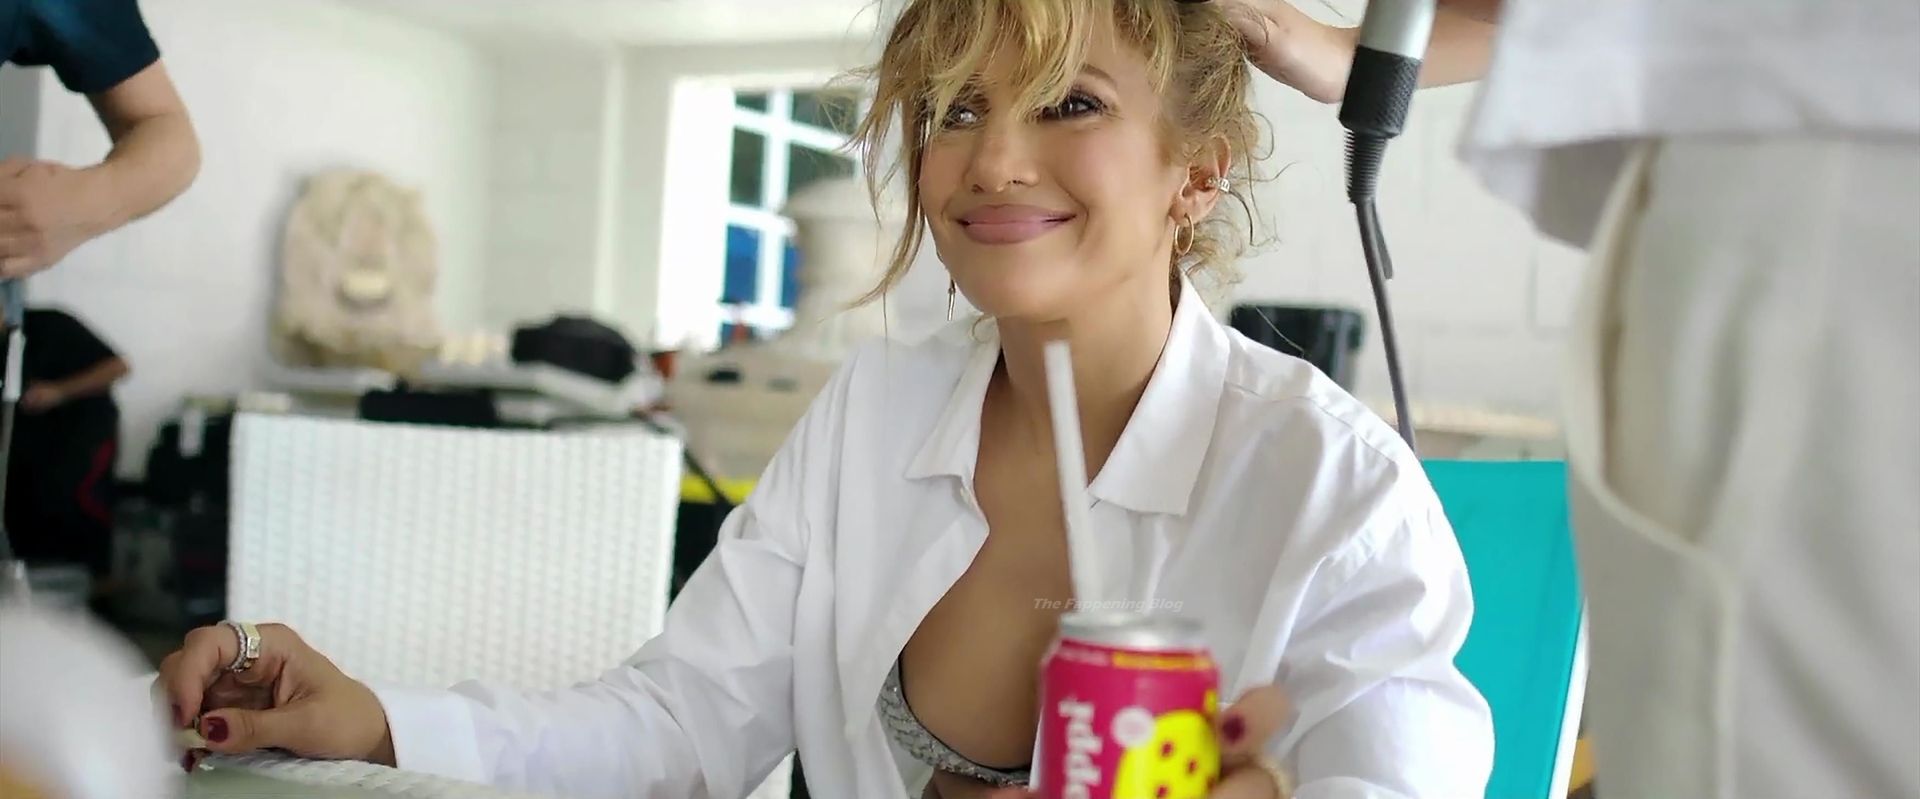 Jennifer-Lopez-Sexy-The-Fappening-Blog-26-1.jpg